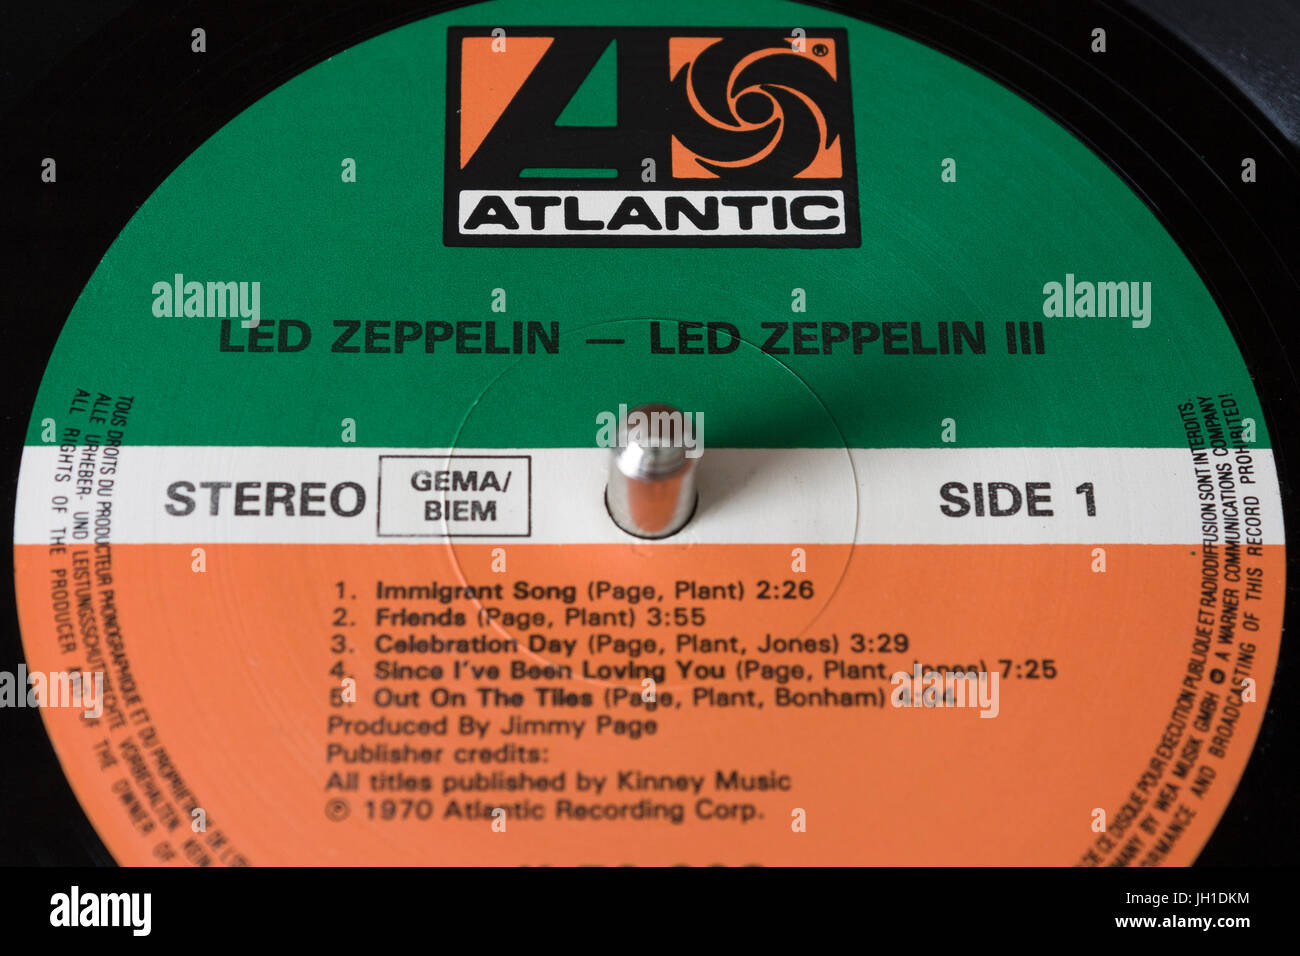 https://c8.alamy.com/compes/jh1dkm/led-zeppelin-disco-de-vinilo-etiqueta-led-zeppelin-iii-album-jh1dkm.jpg